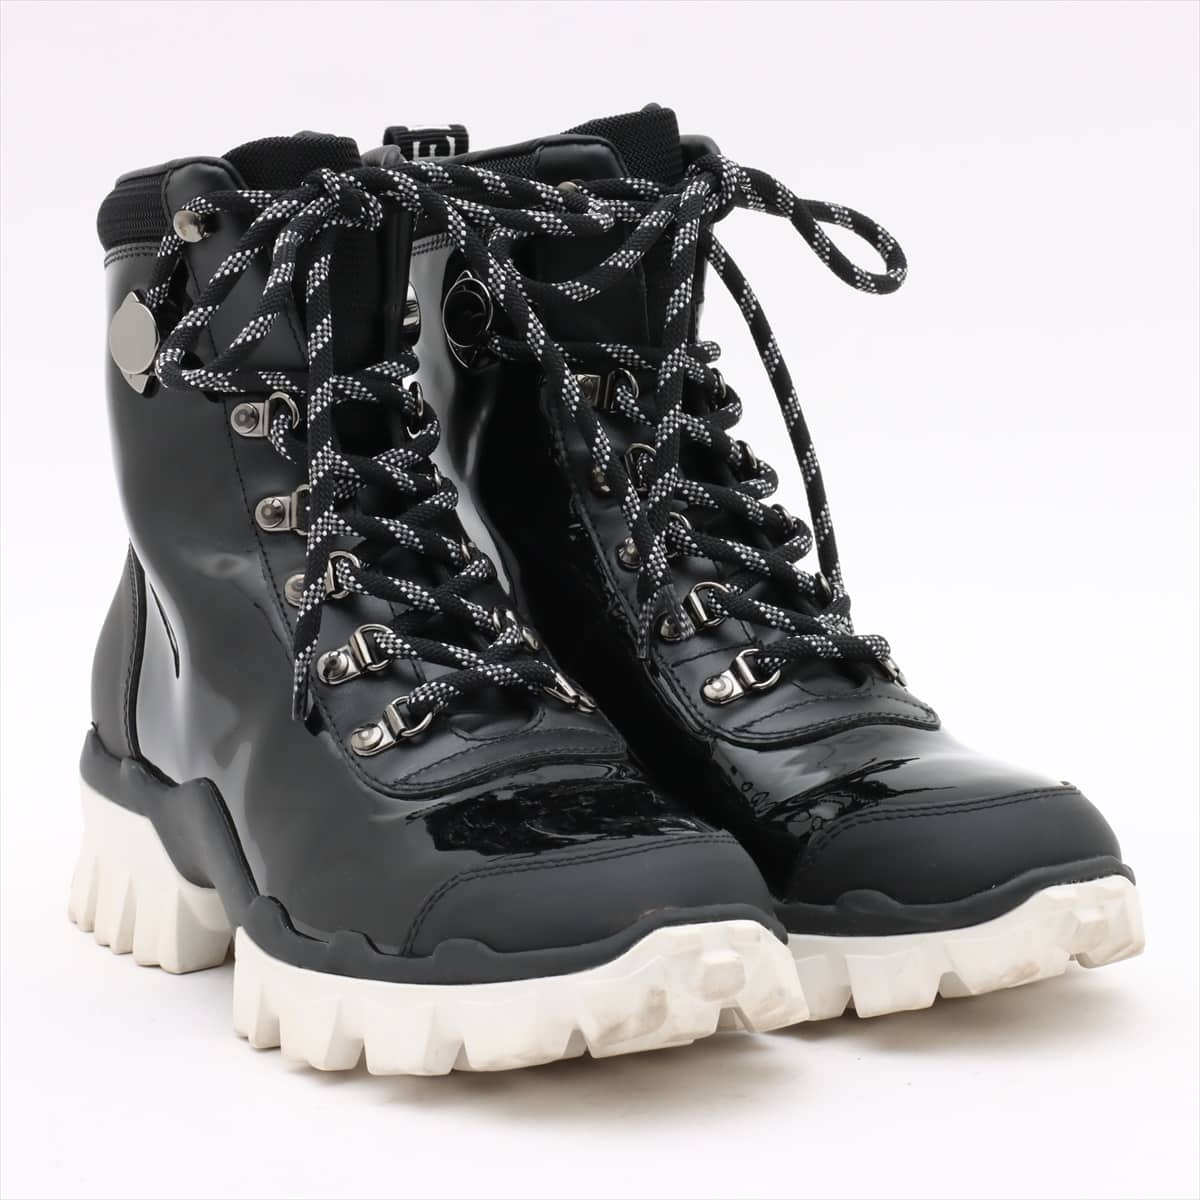 Moncler Genius 1952 19AW Leather × Rubber Boots 37 Ladies' Black HELIS STIVALE